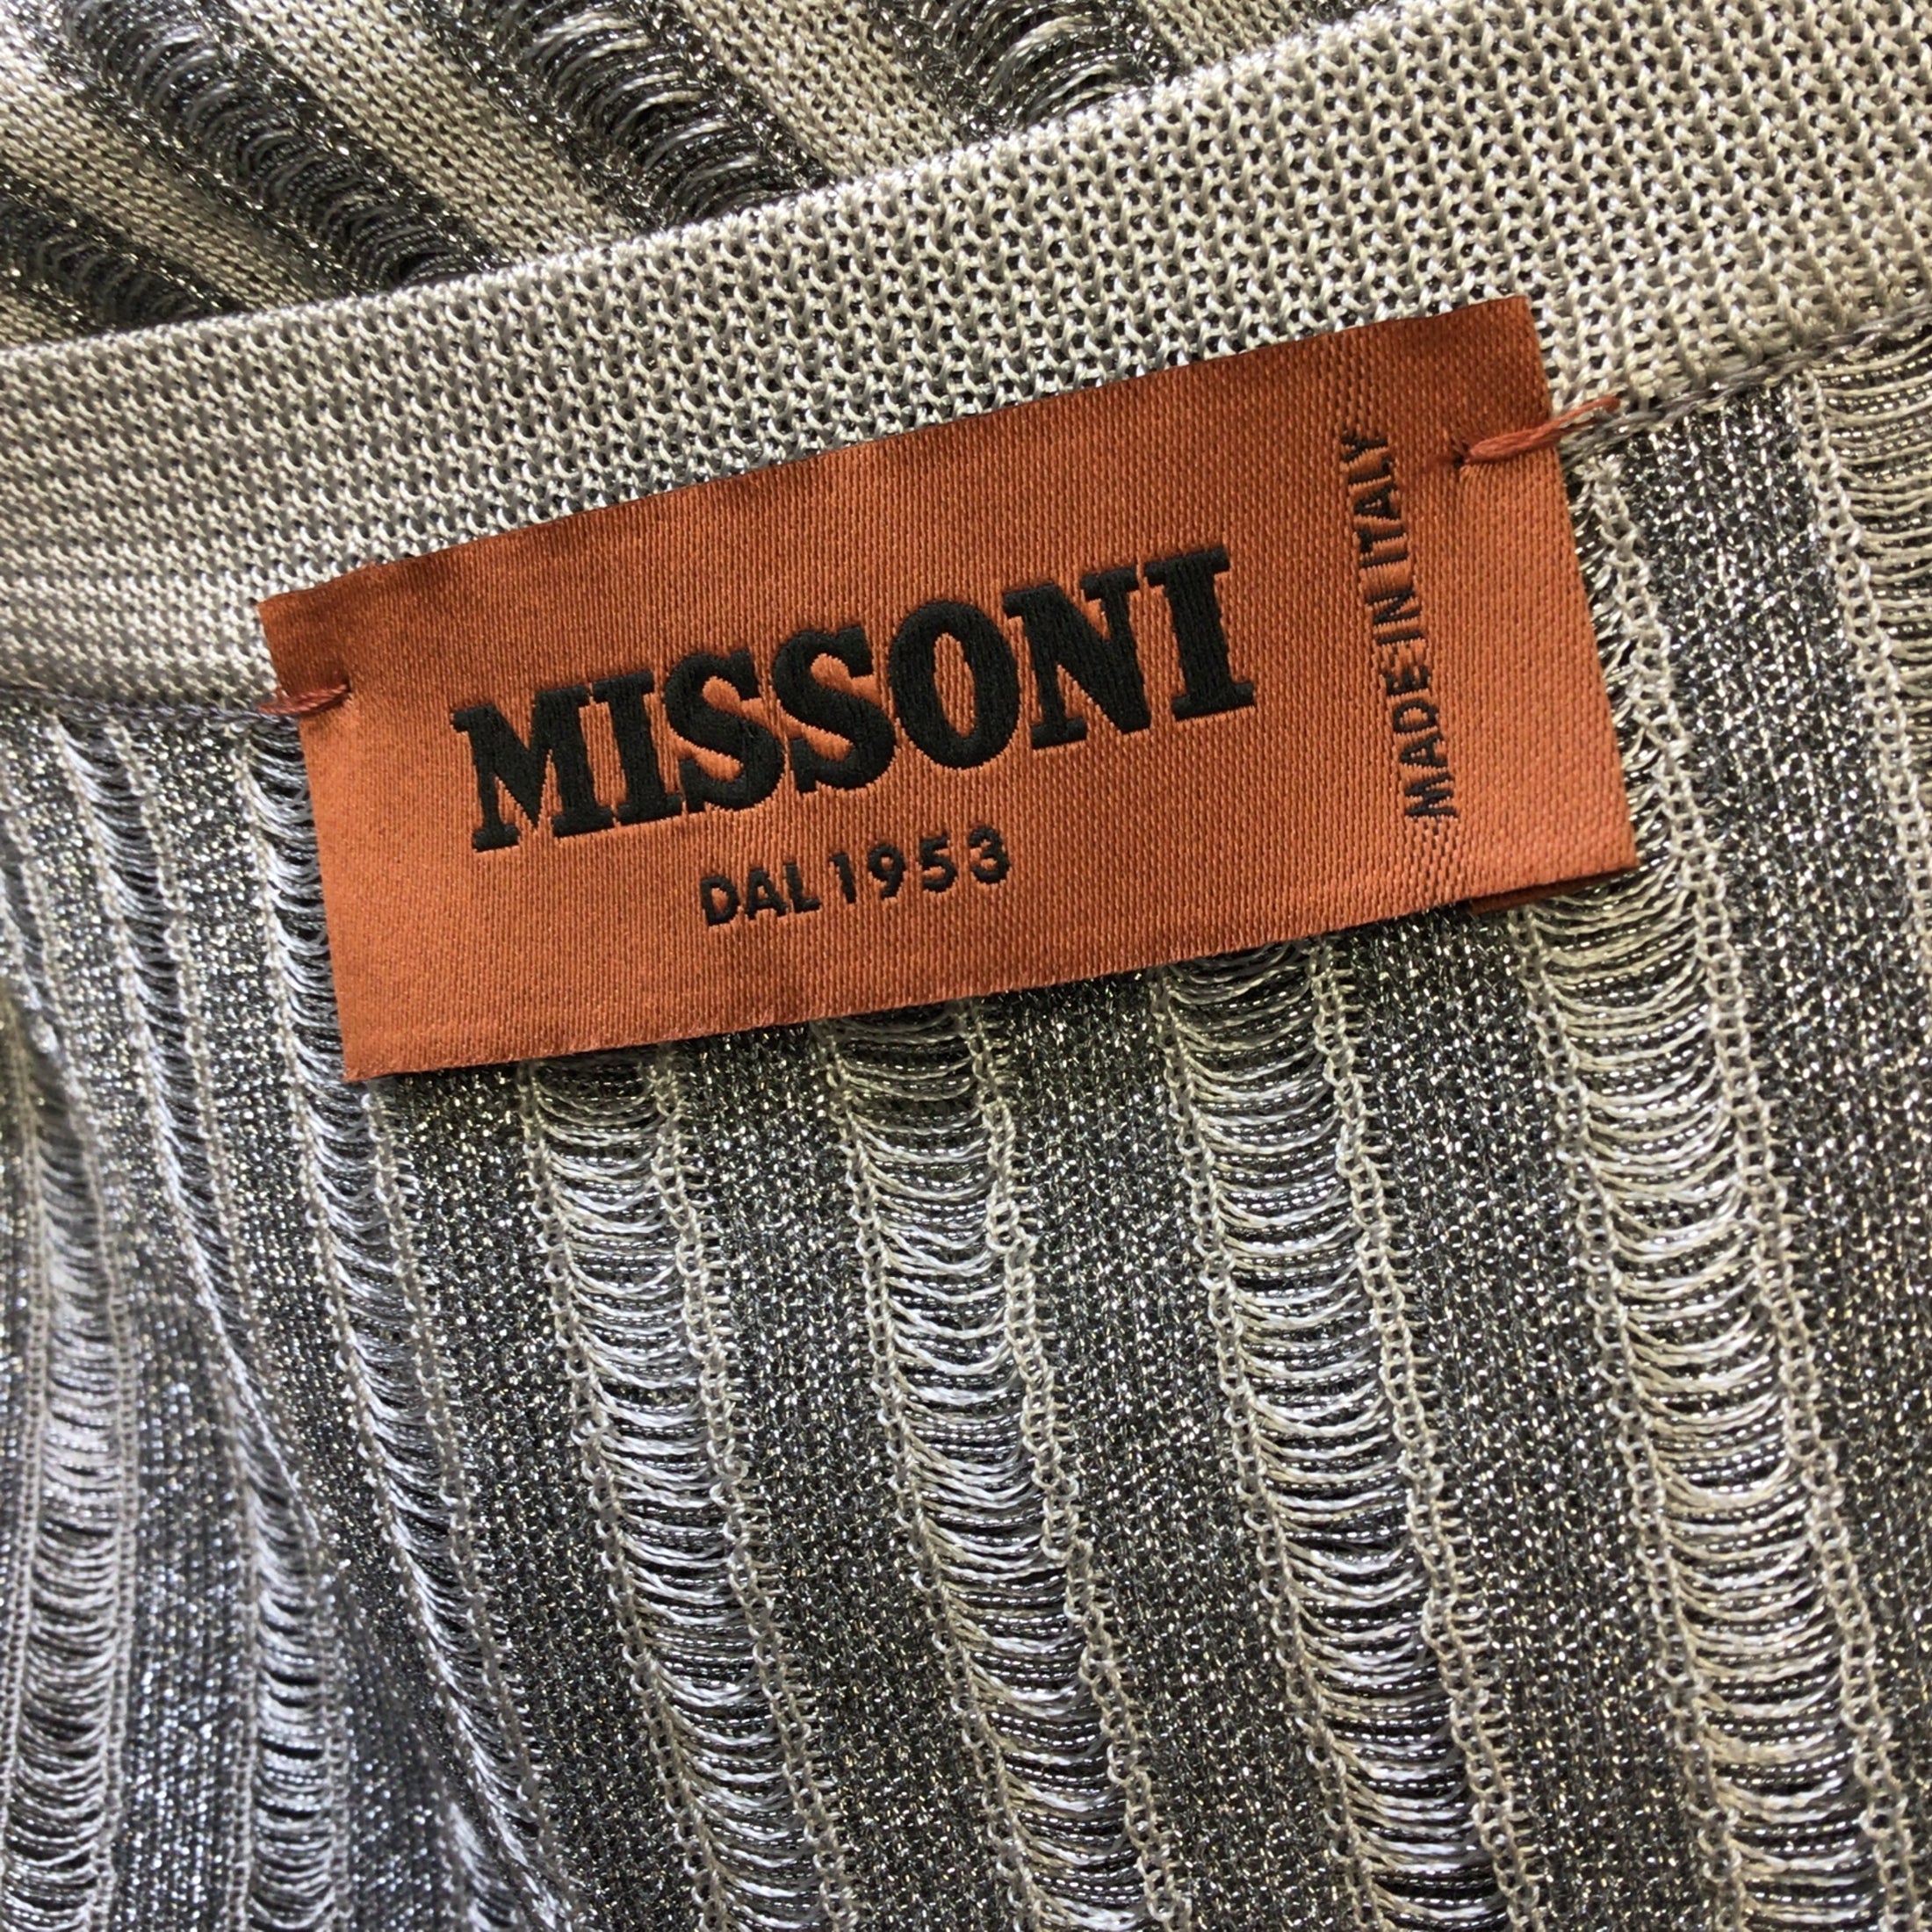 Missoni Silver Metallic Long Sleeved Open Front Knit Long Cardigan Sweater